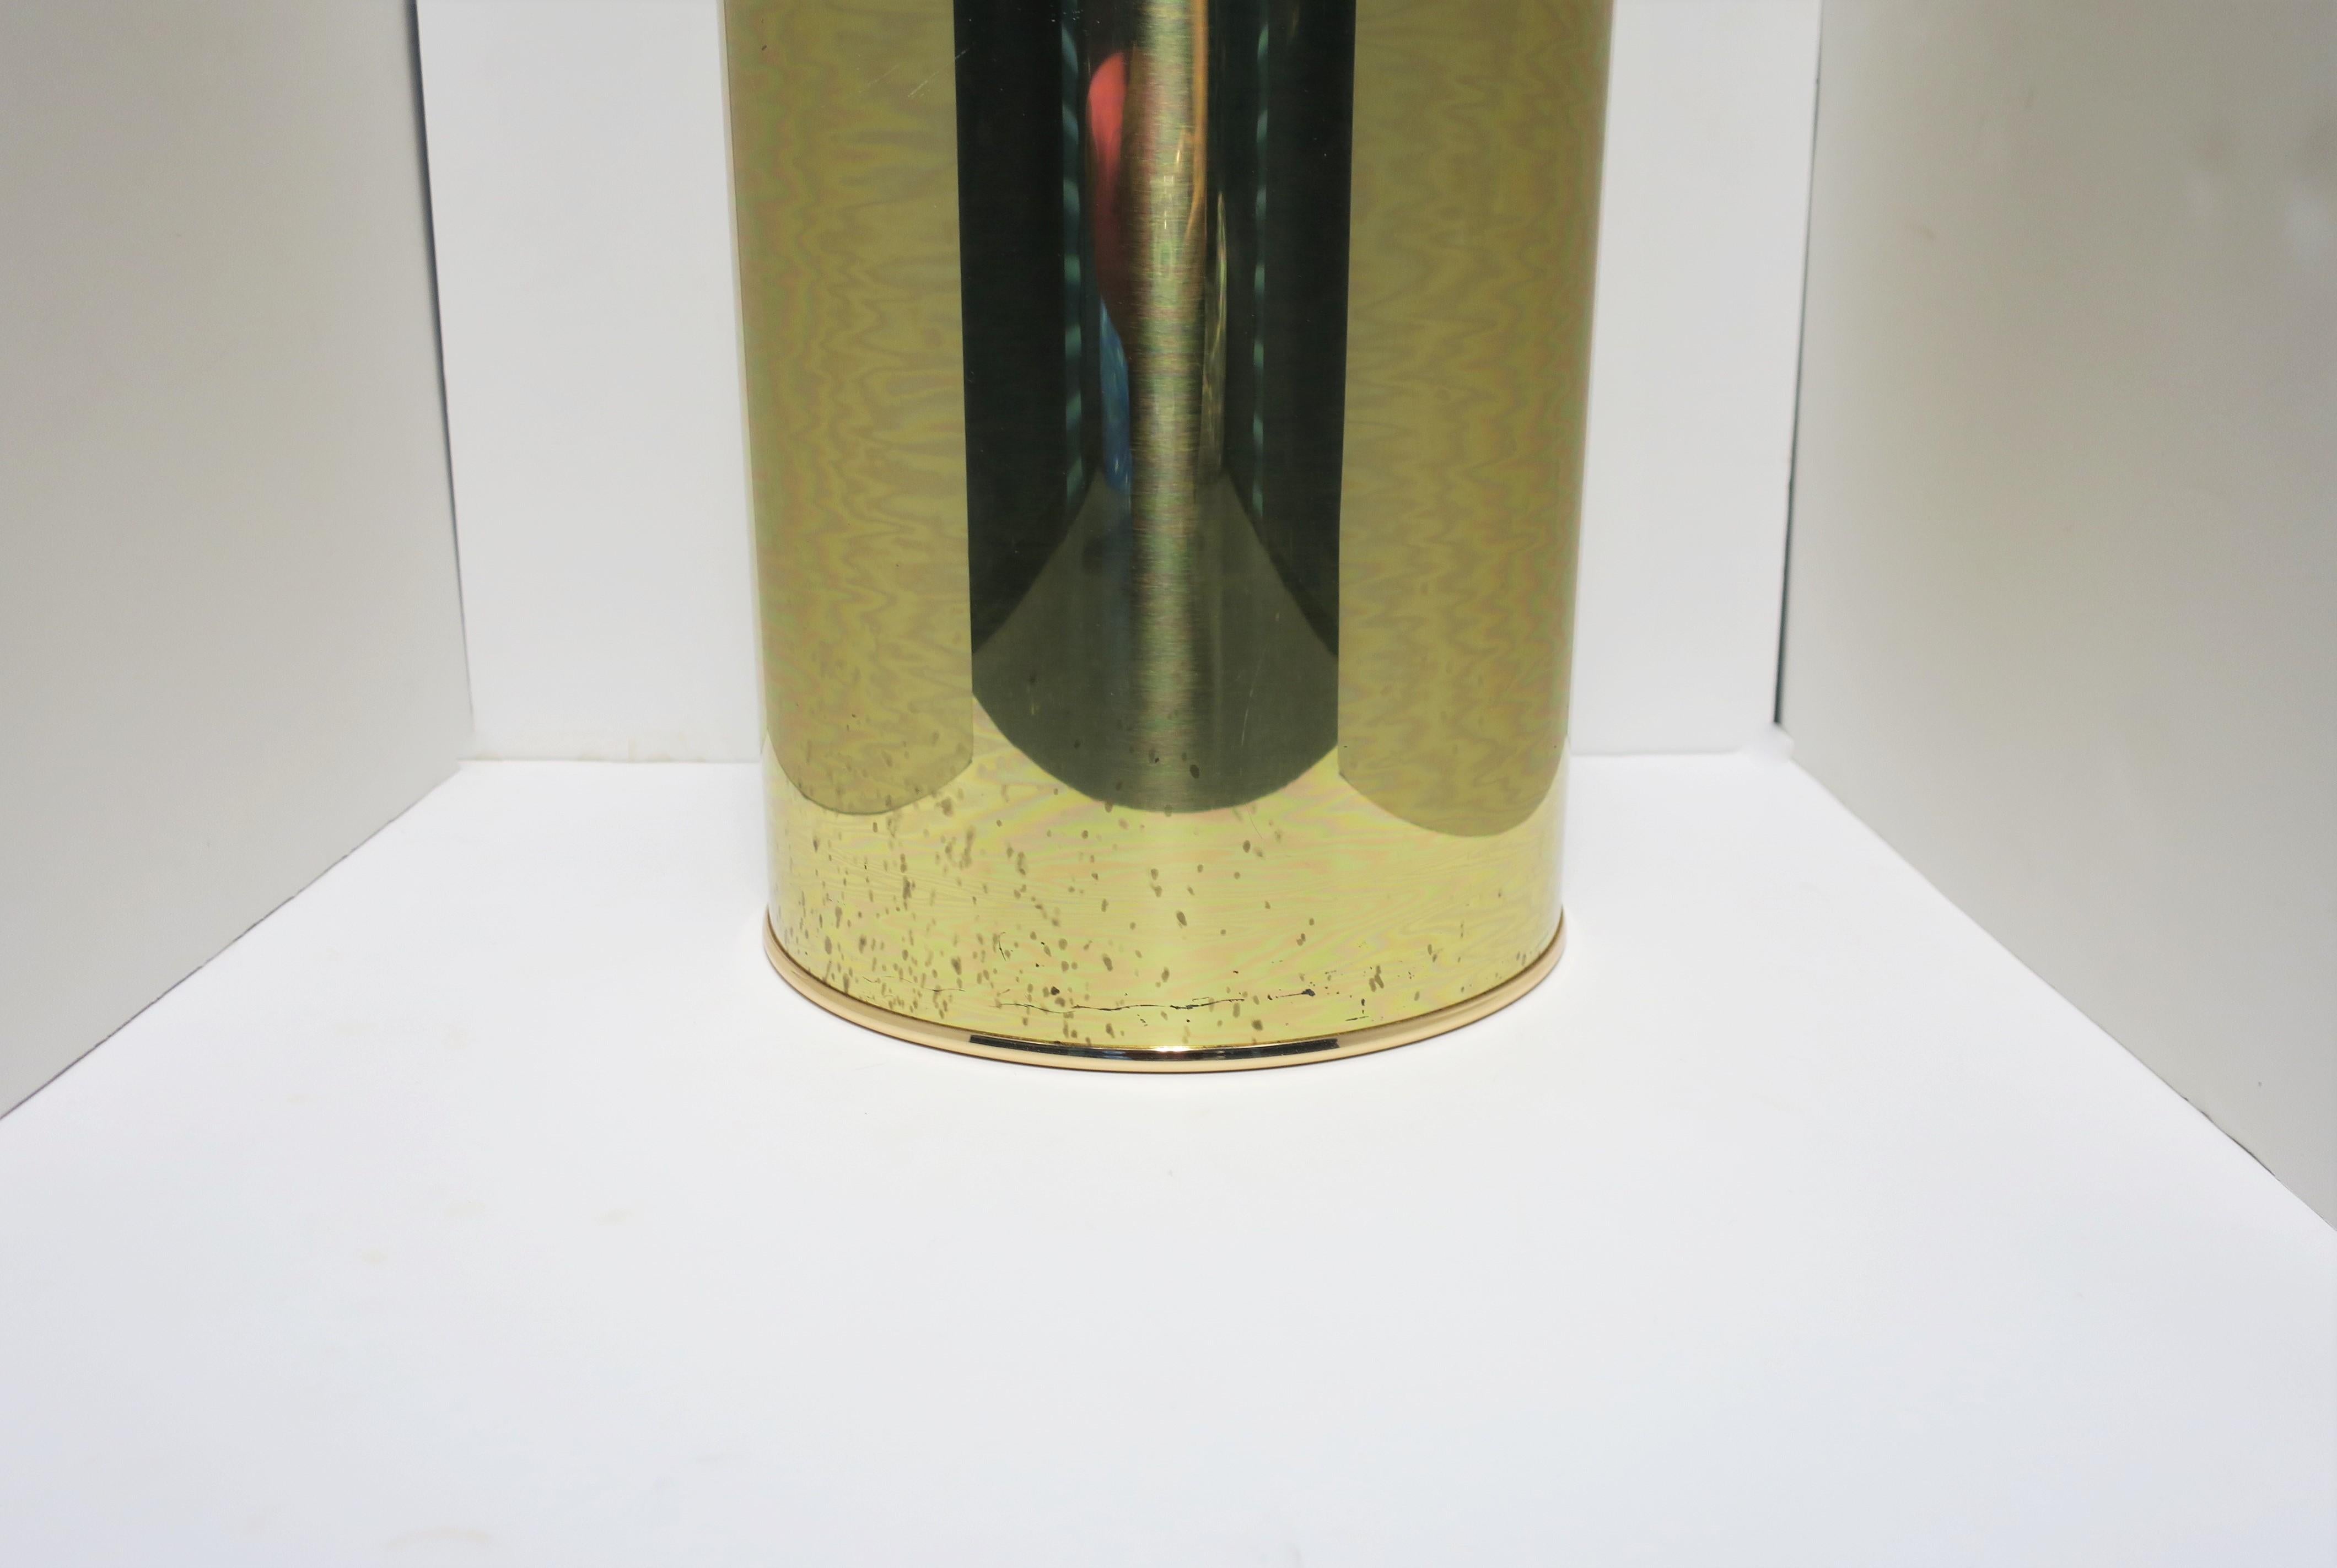 Modern Brass Pedestal Column Pillar Stand Signed by Designers C. Jere For Sale 6